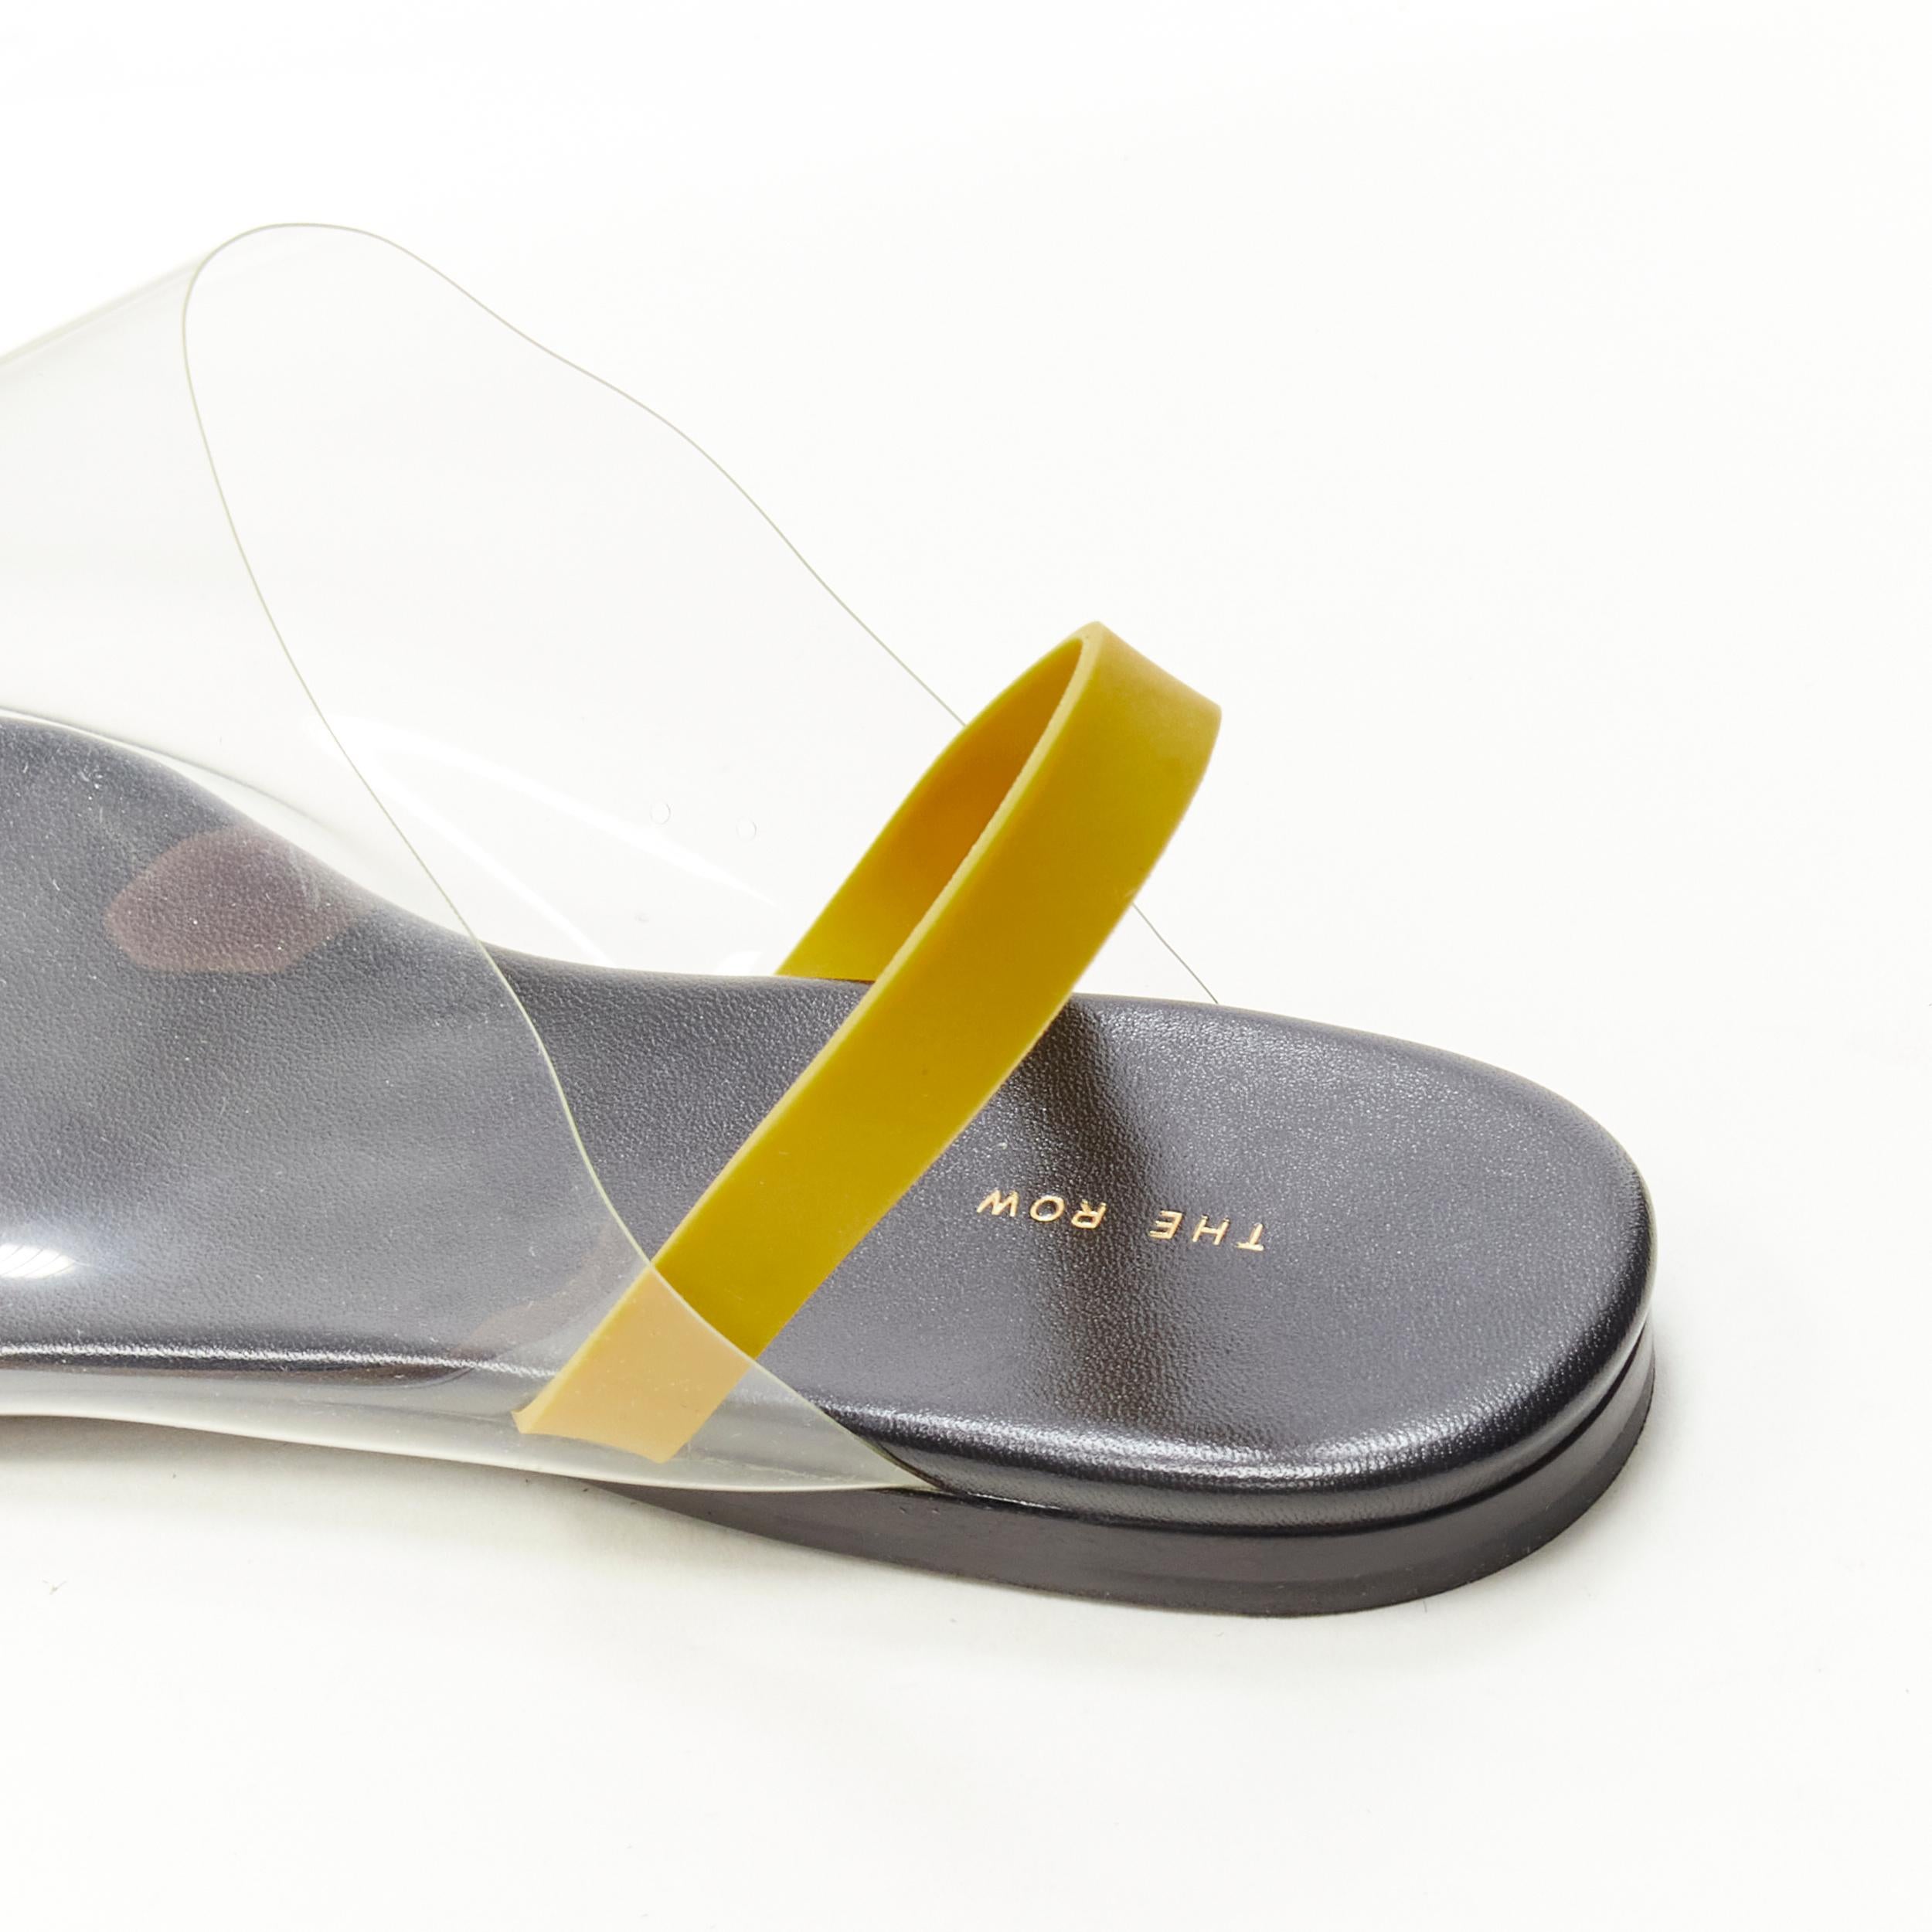 new THE ROW Clear PVC open toe yellow rubber slingback flat sandal EU36.5 4